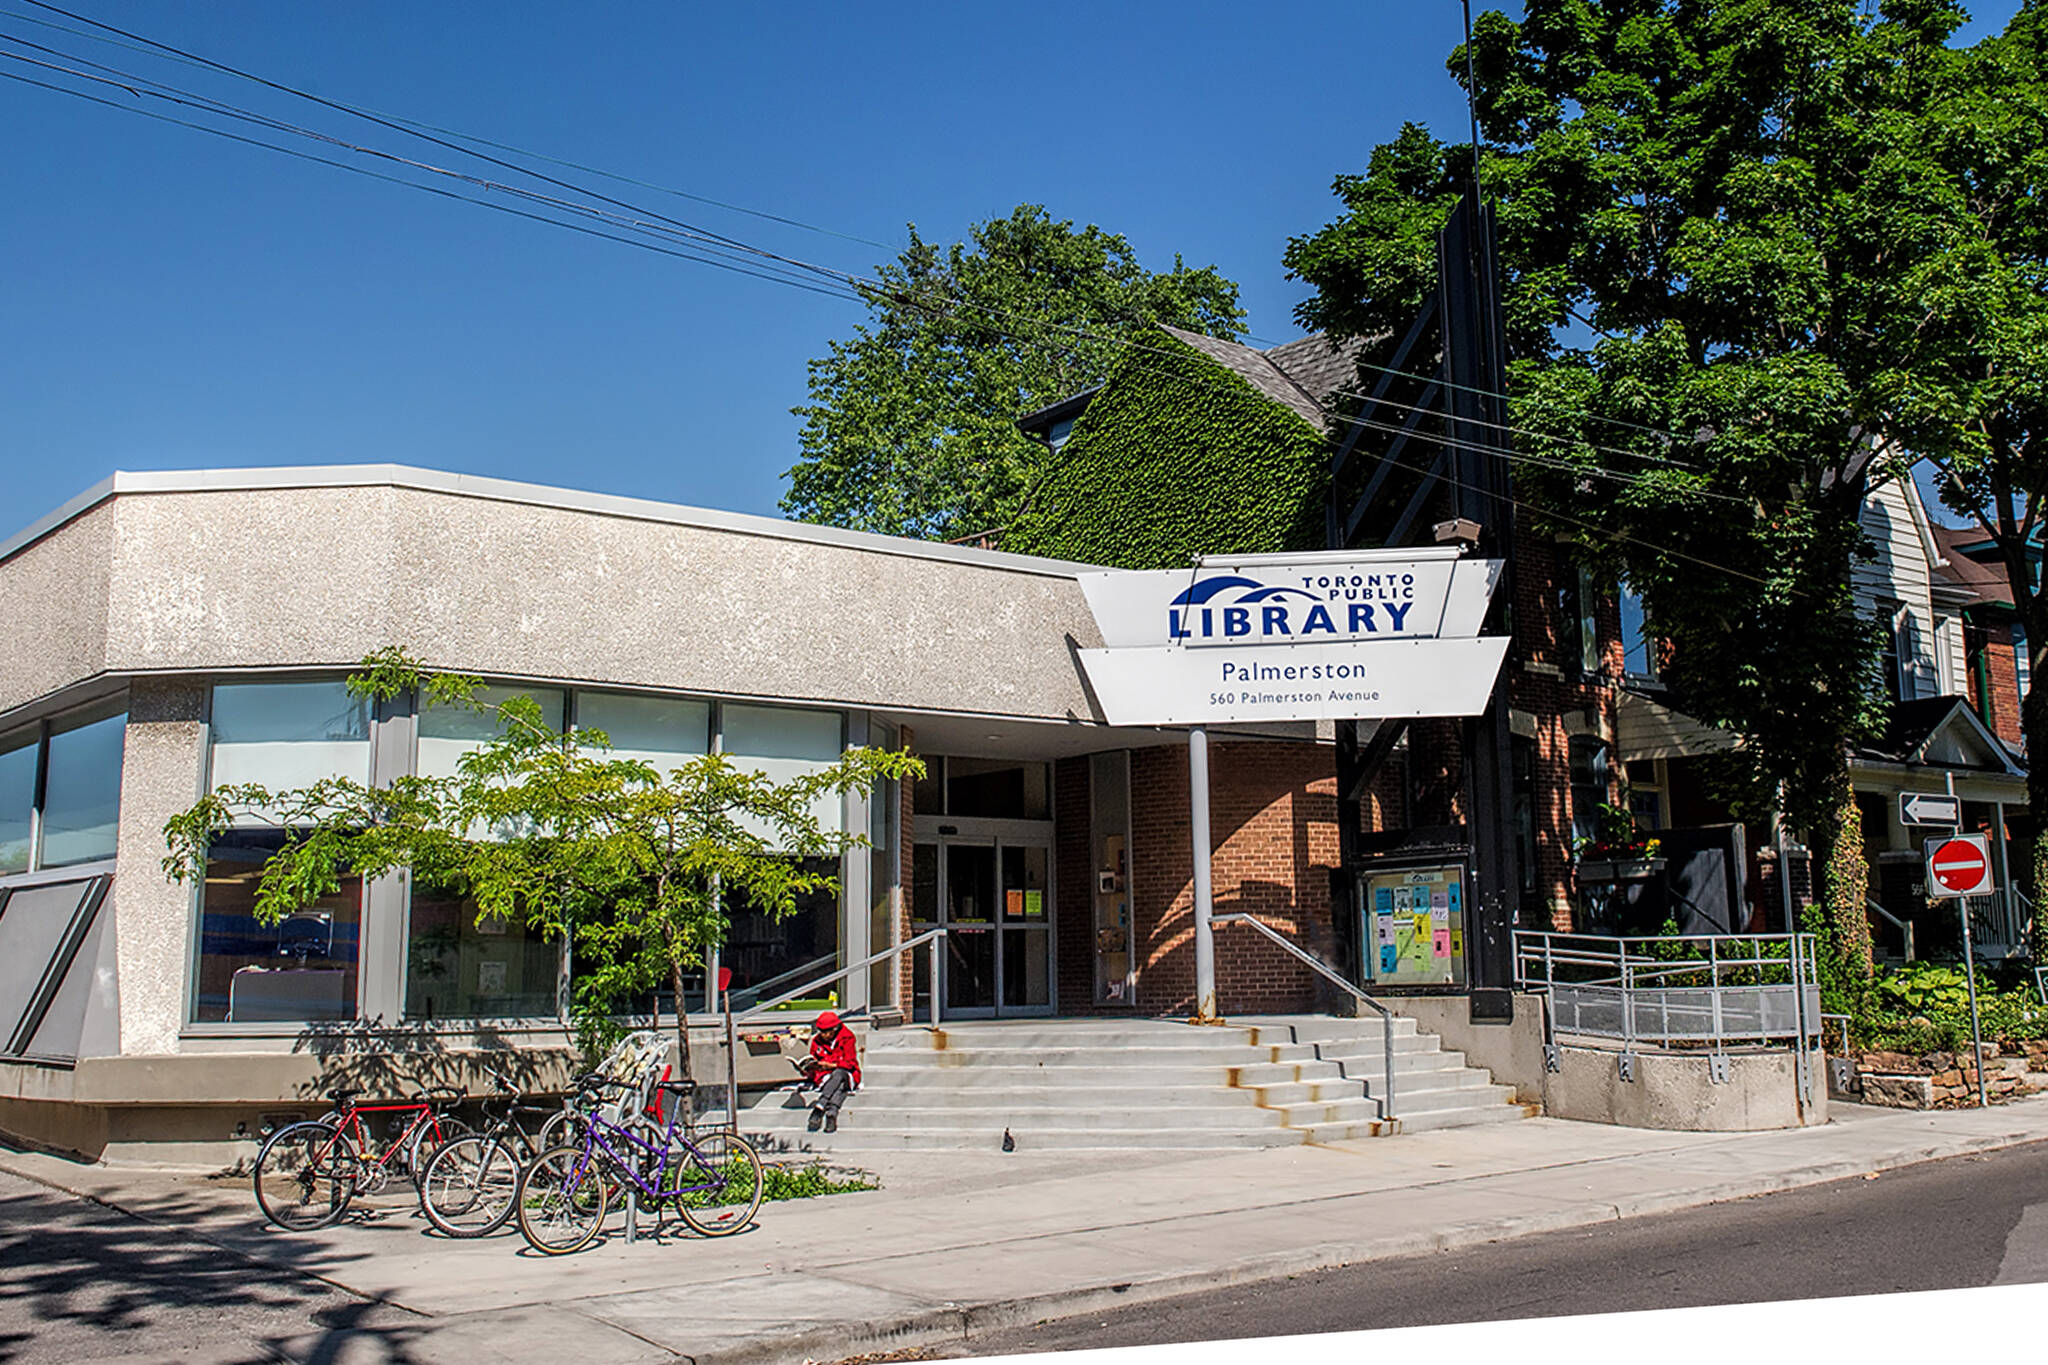 Toronto public library